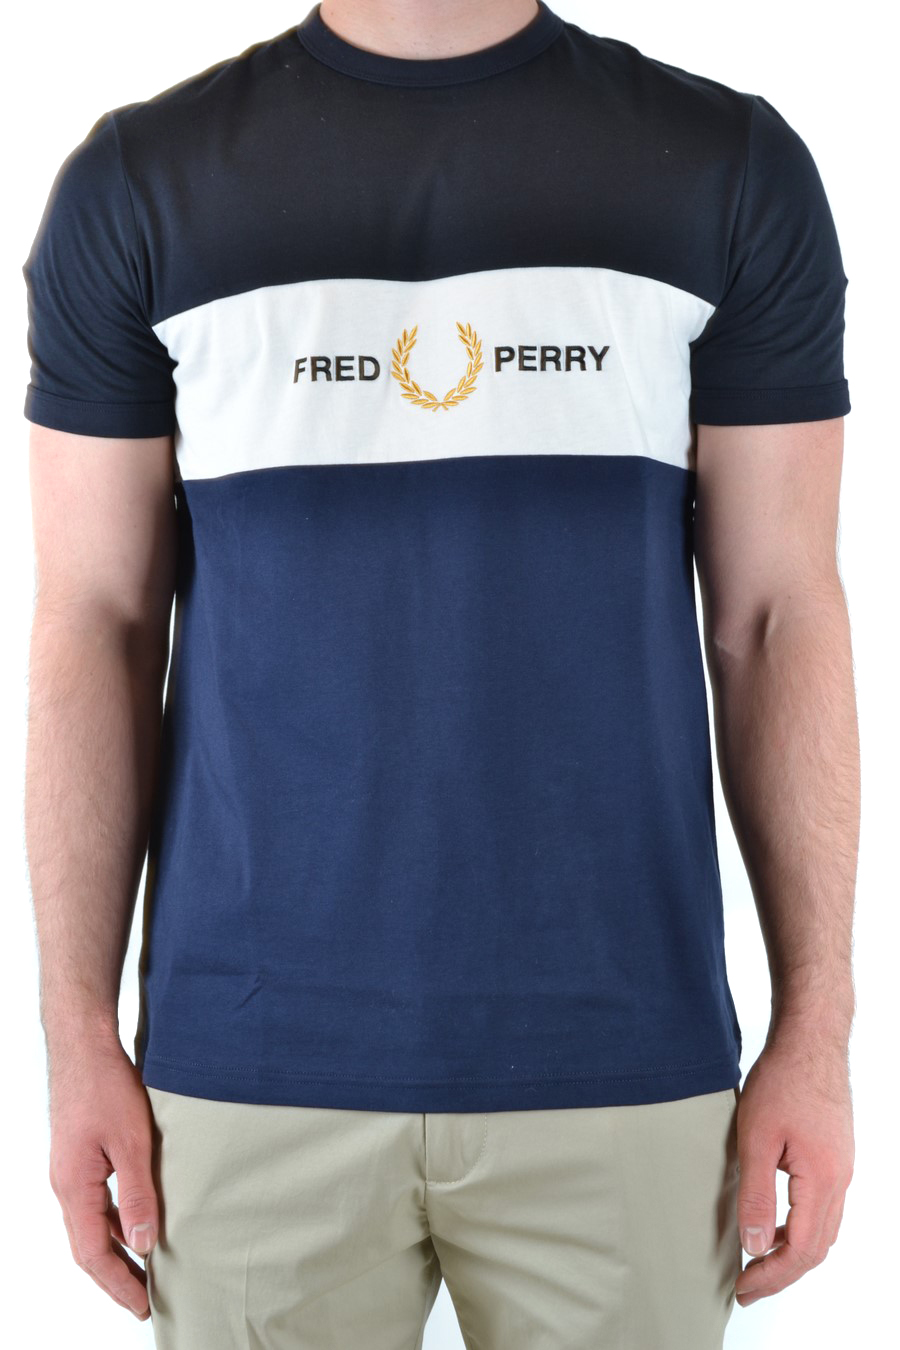 FRED PERRY T-shirts | ViganoBoutique.com